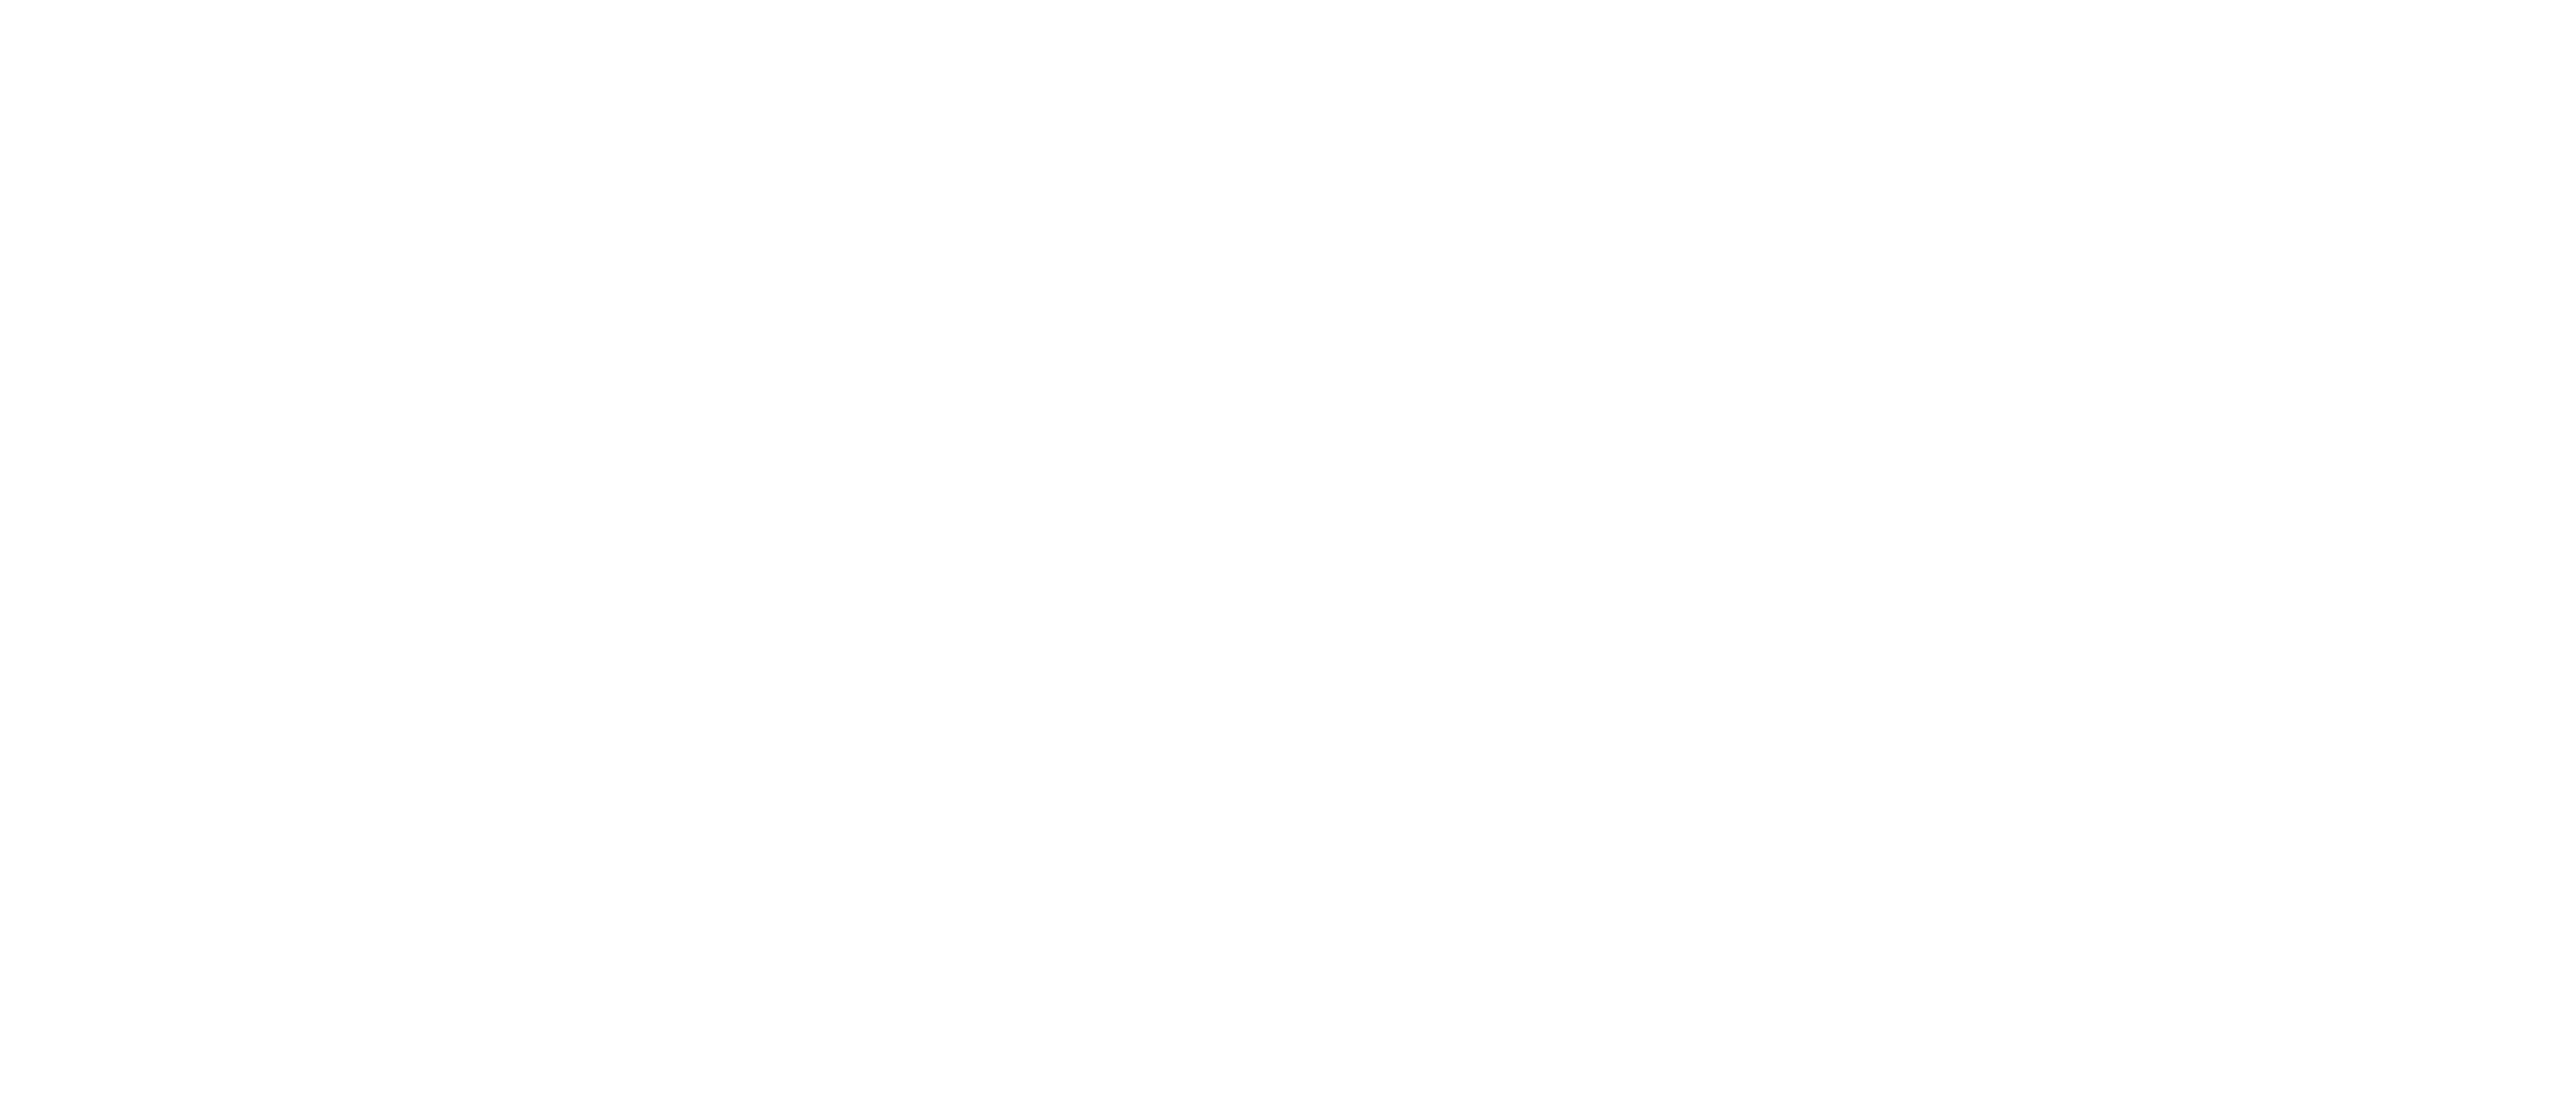 Logo icon for Alley South Lake Union in Seattle, Washington